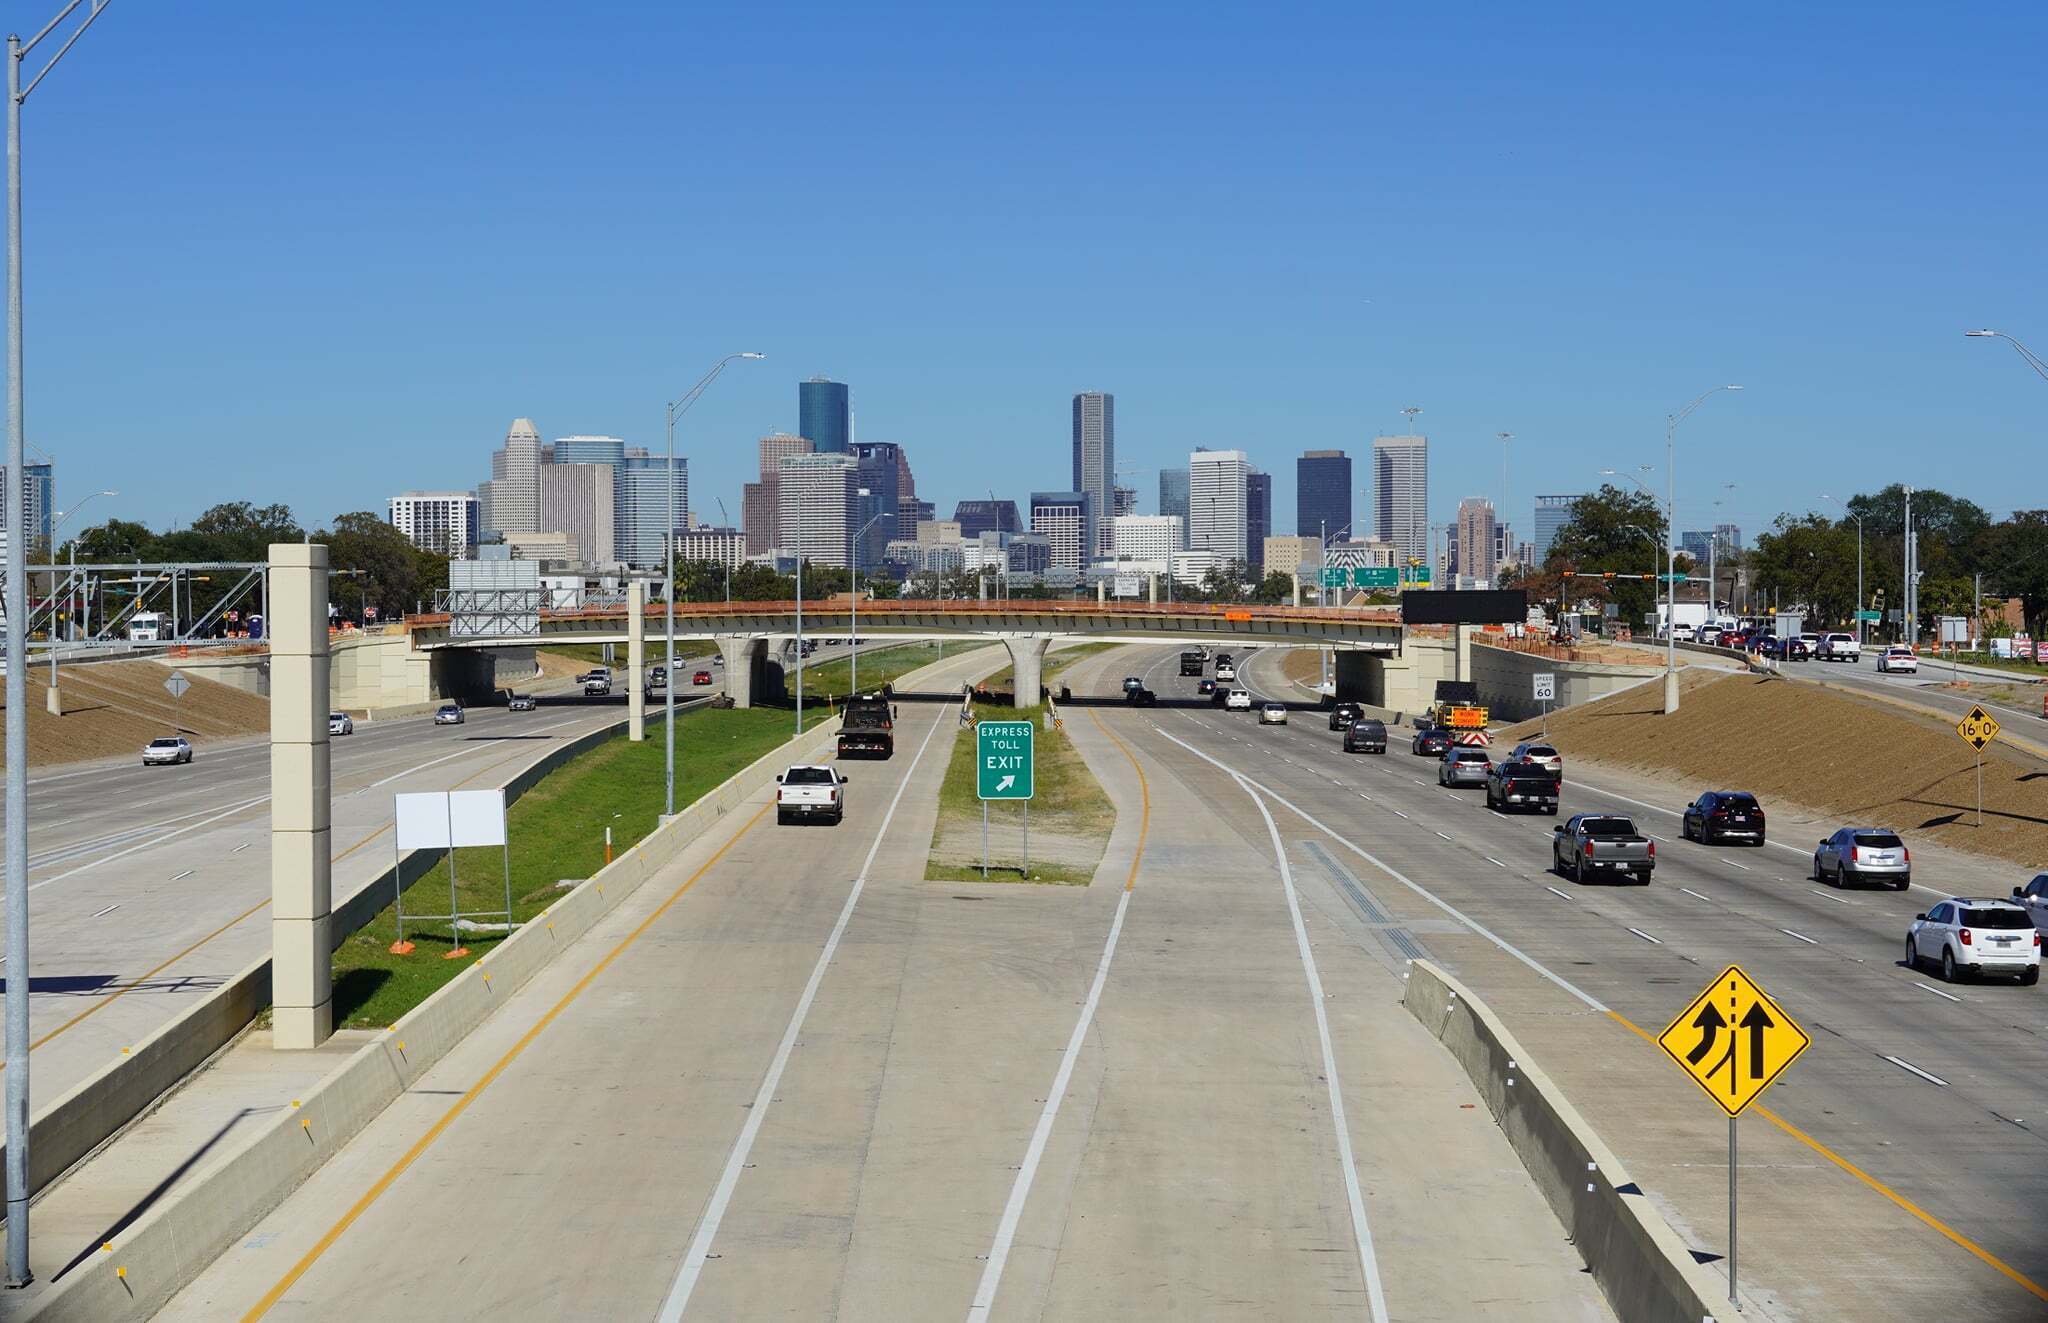 Autopista SH-288 en Houston, Texas, gestionada por ACS y Abertis.